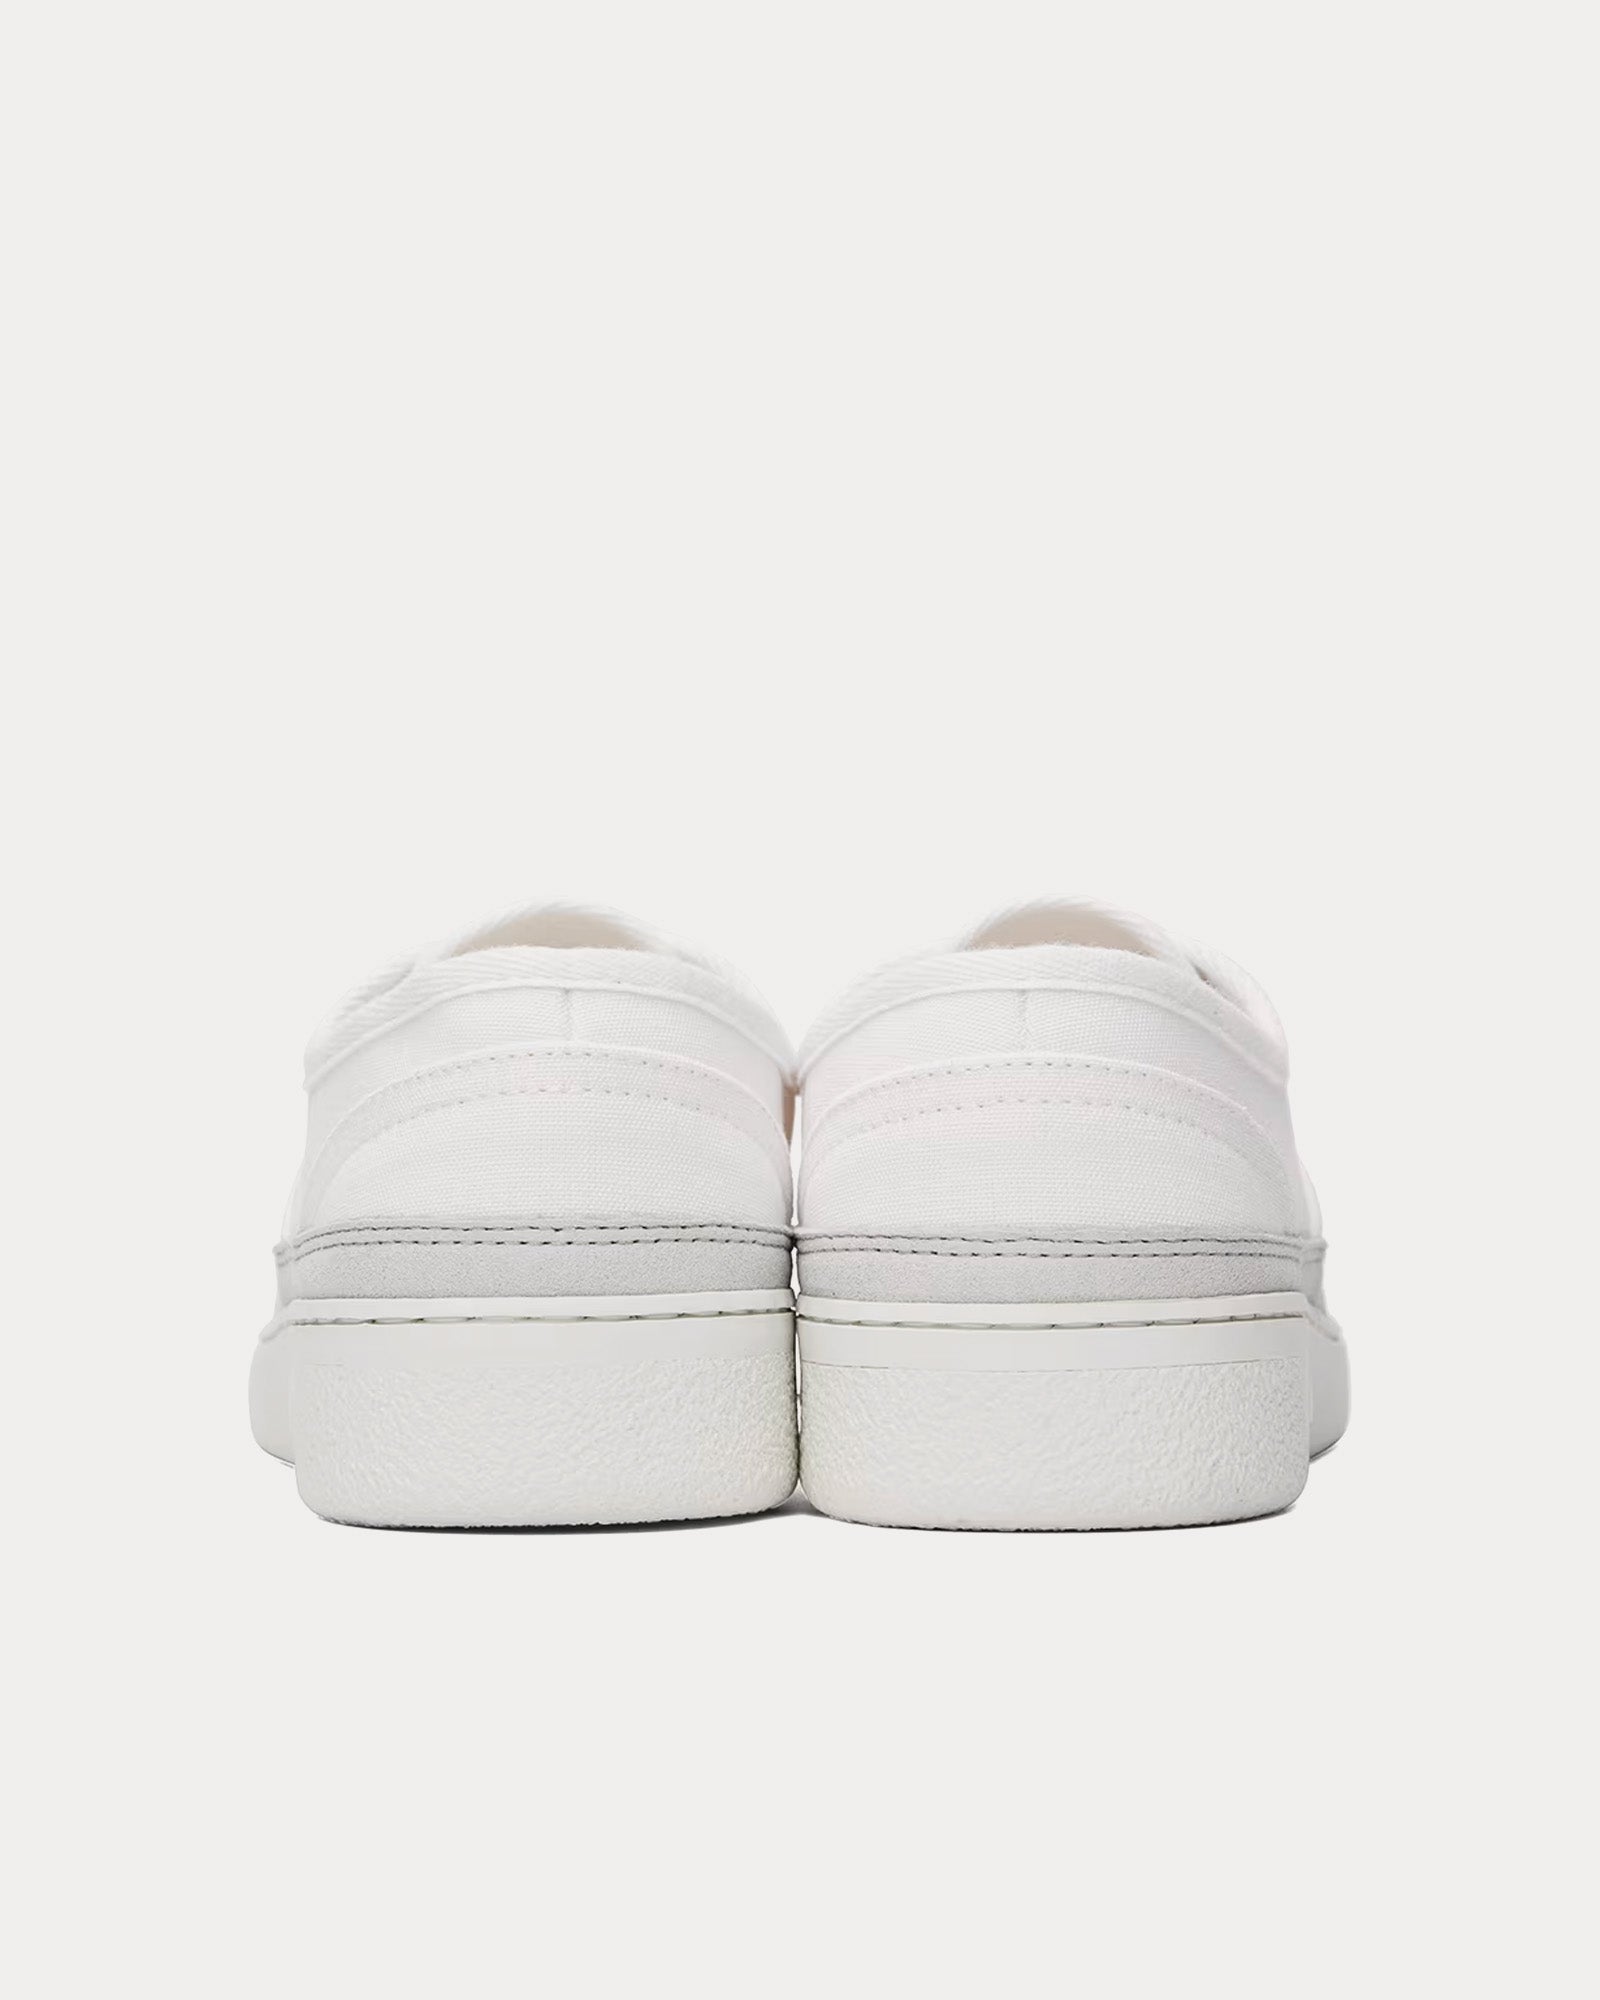 A.P.C. - Plain Simple Canvas White Low Top Sneakers